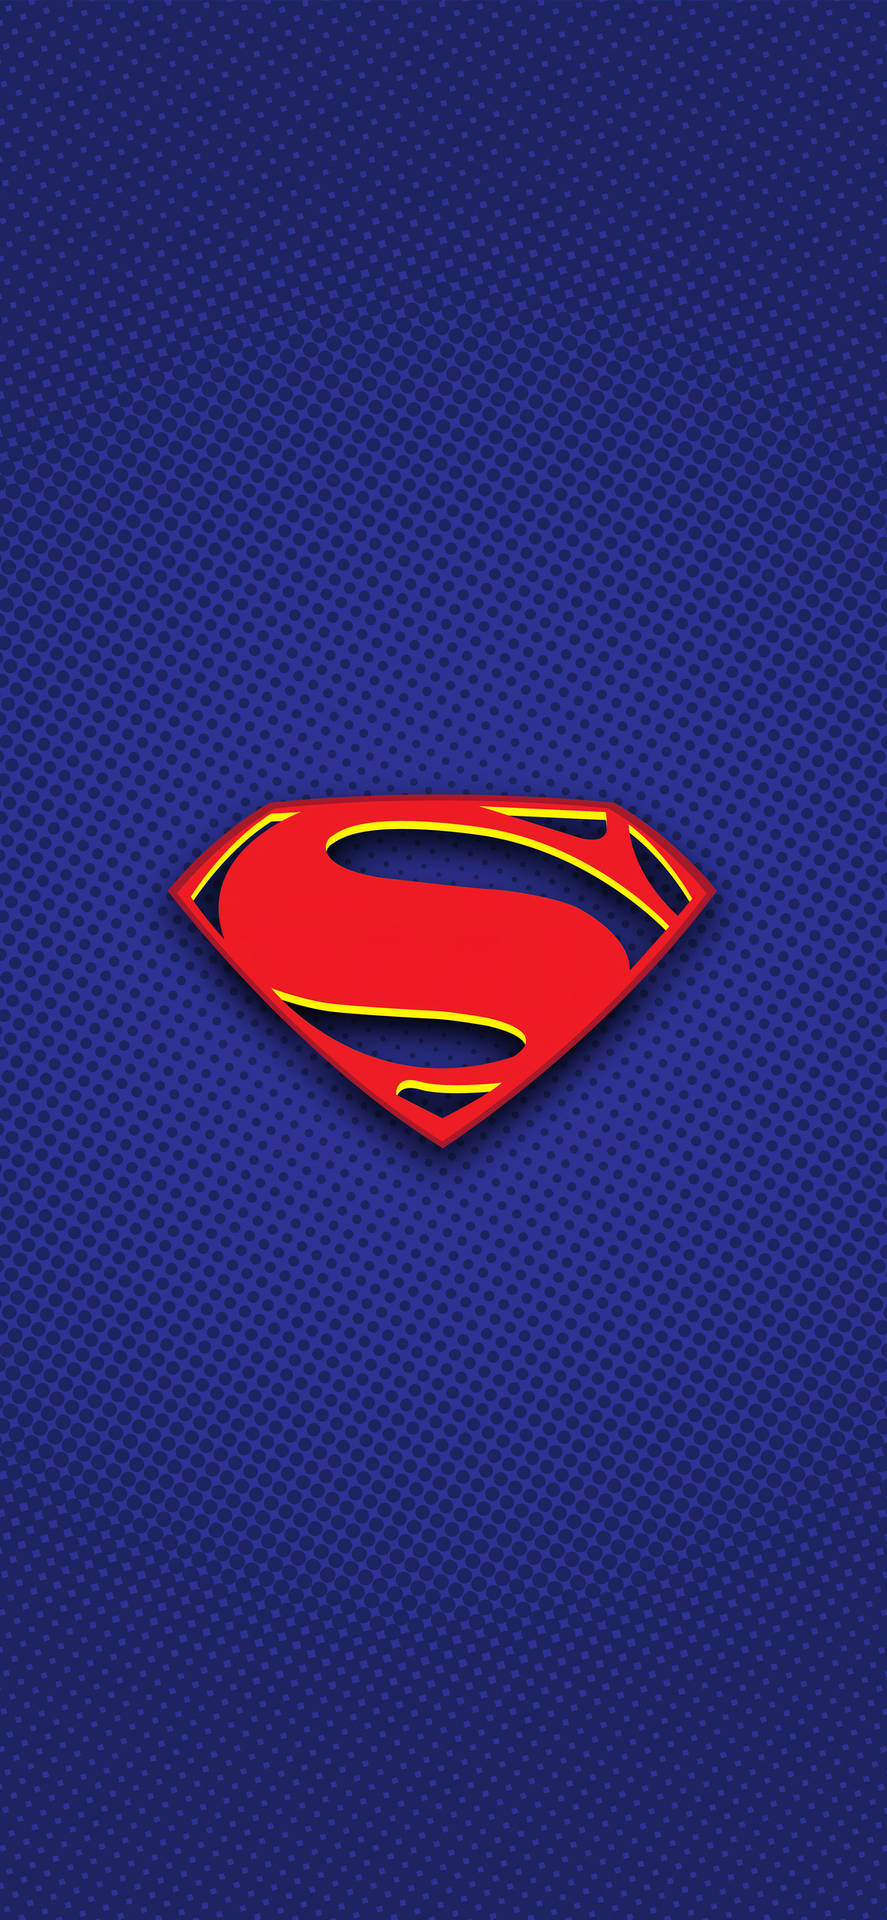 Superman Symbol Iphone Blue Dots Background